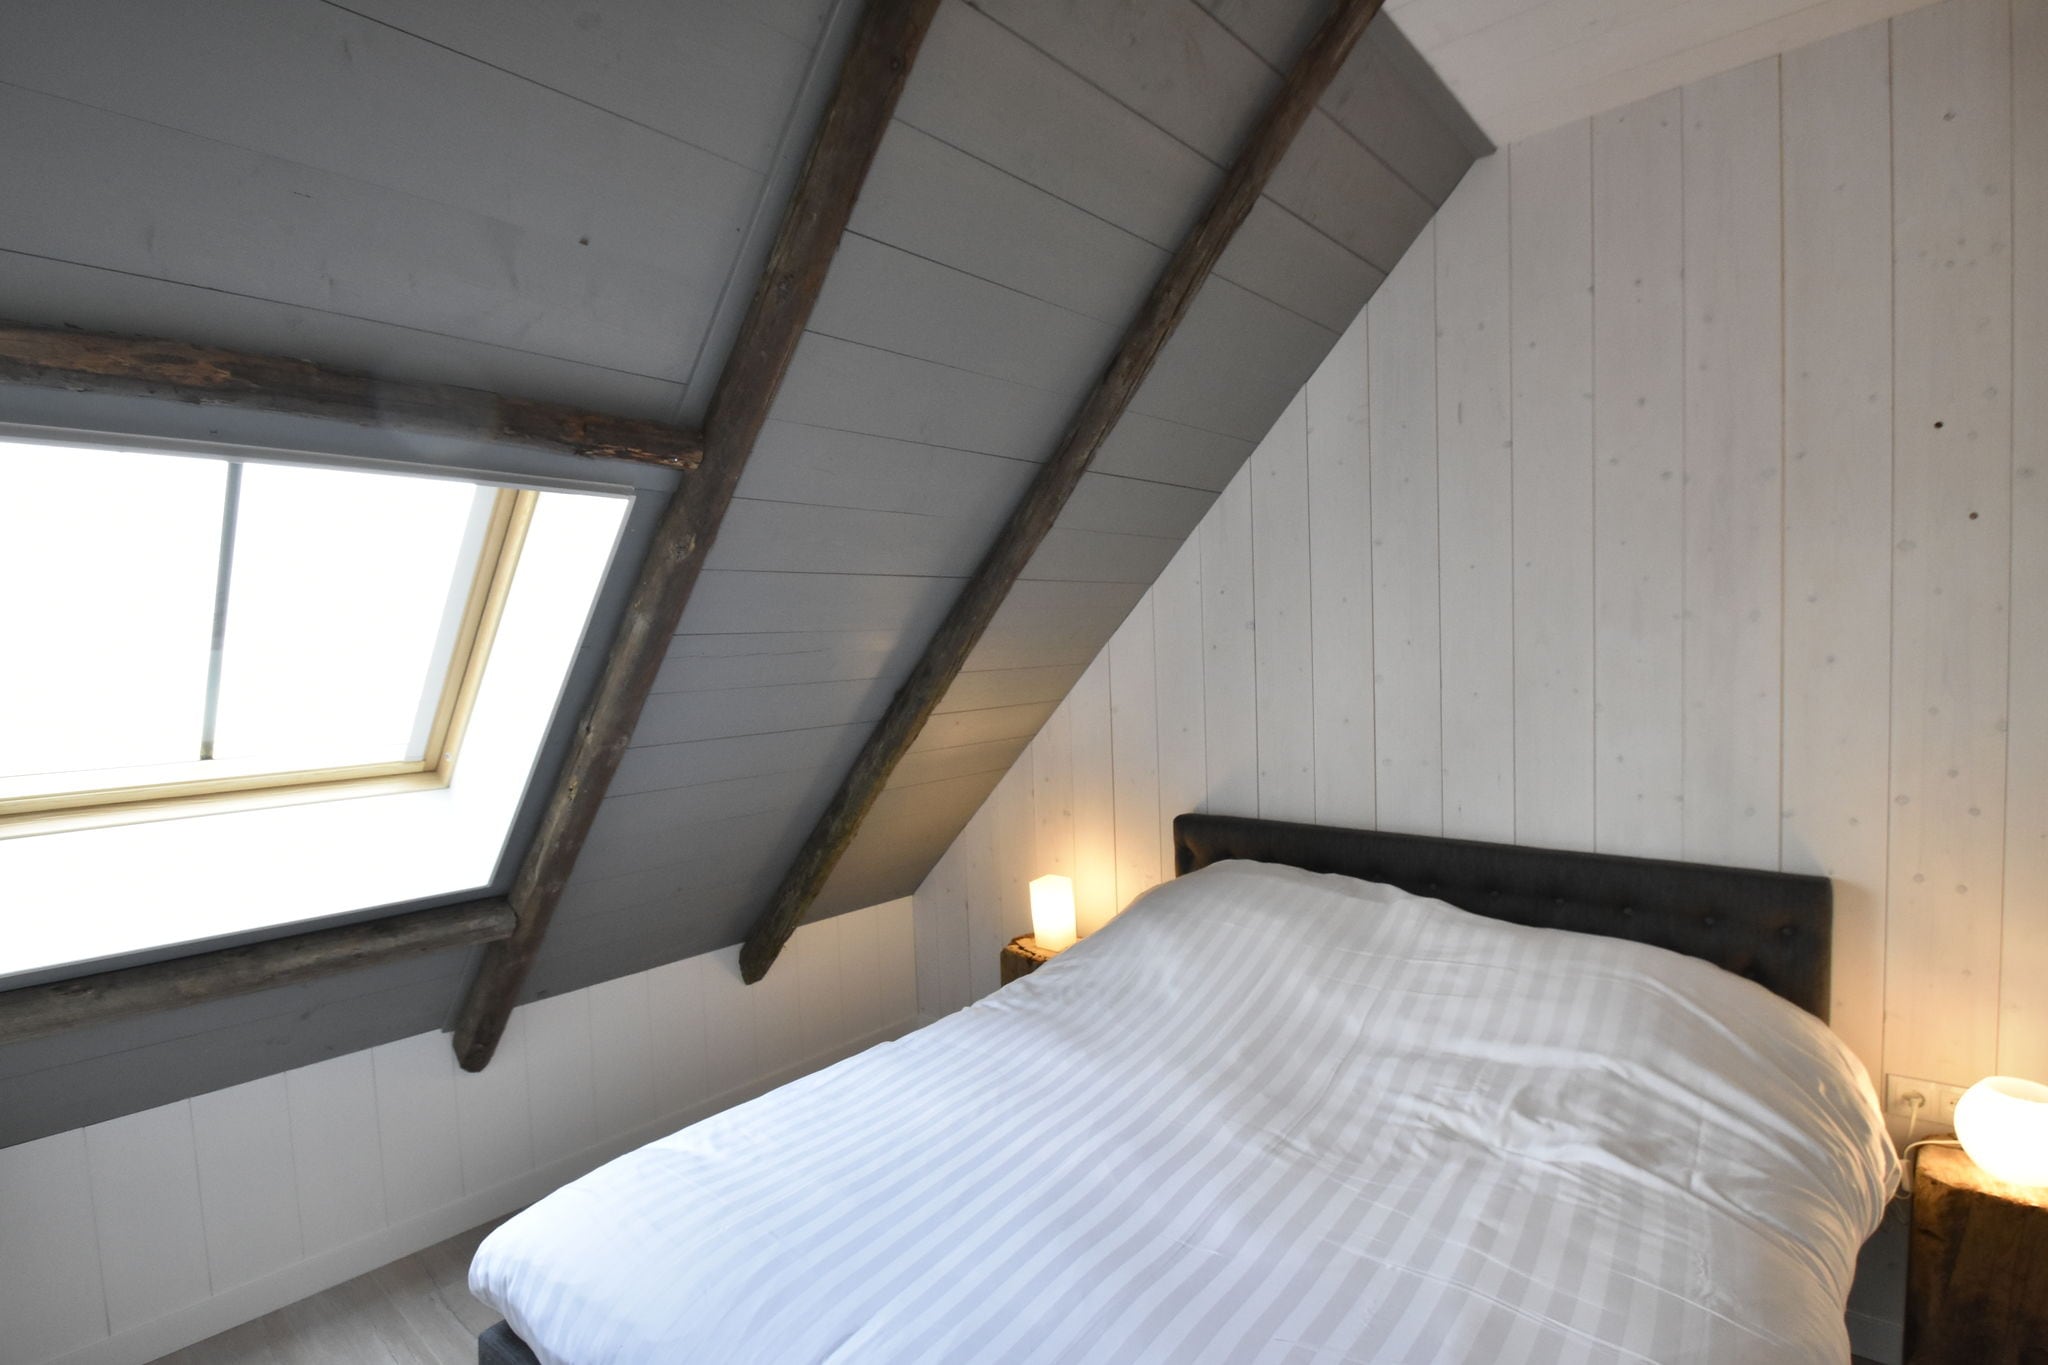 Apartment in Callantsoog with sauna